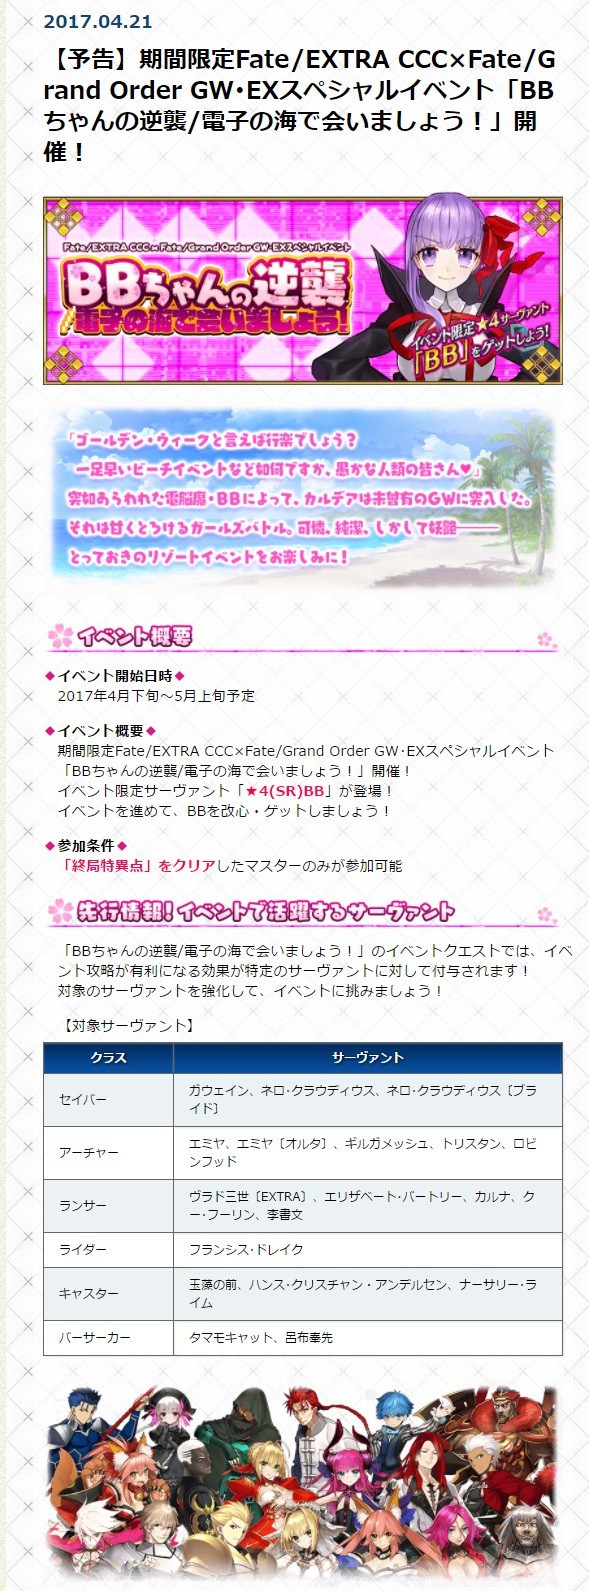 Fgo日服ccc联动公告 Fate Grand Order 手心游戏